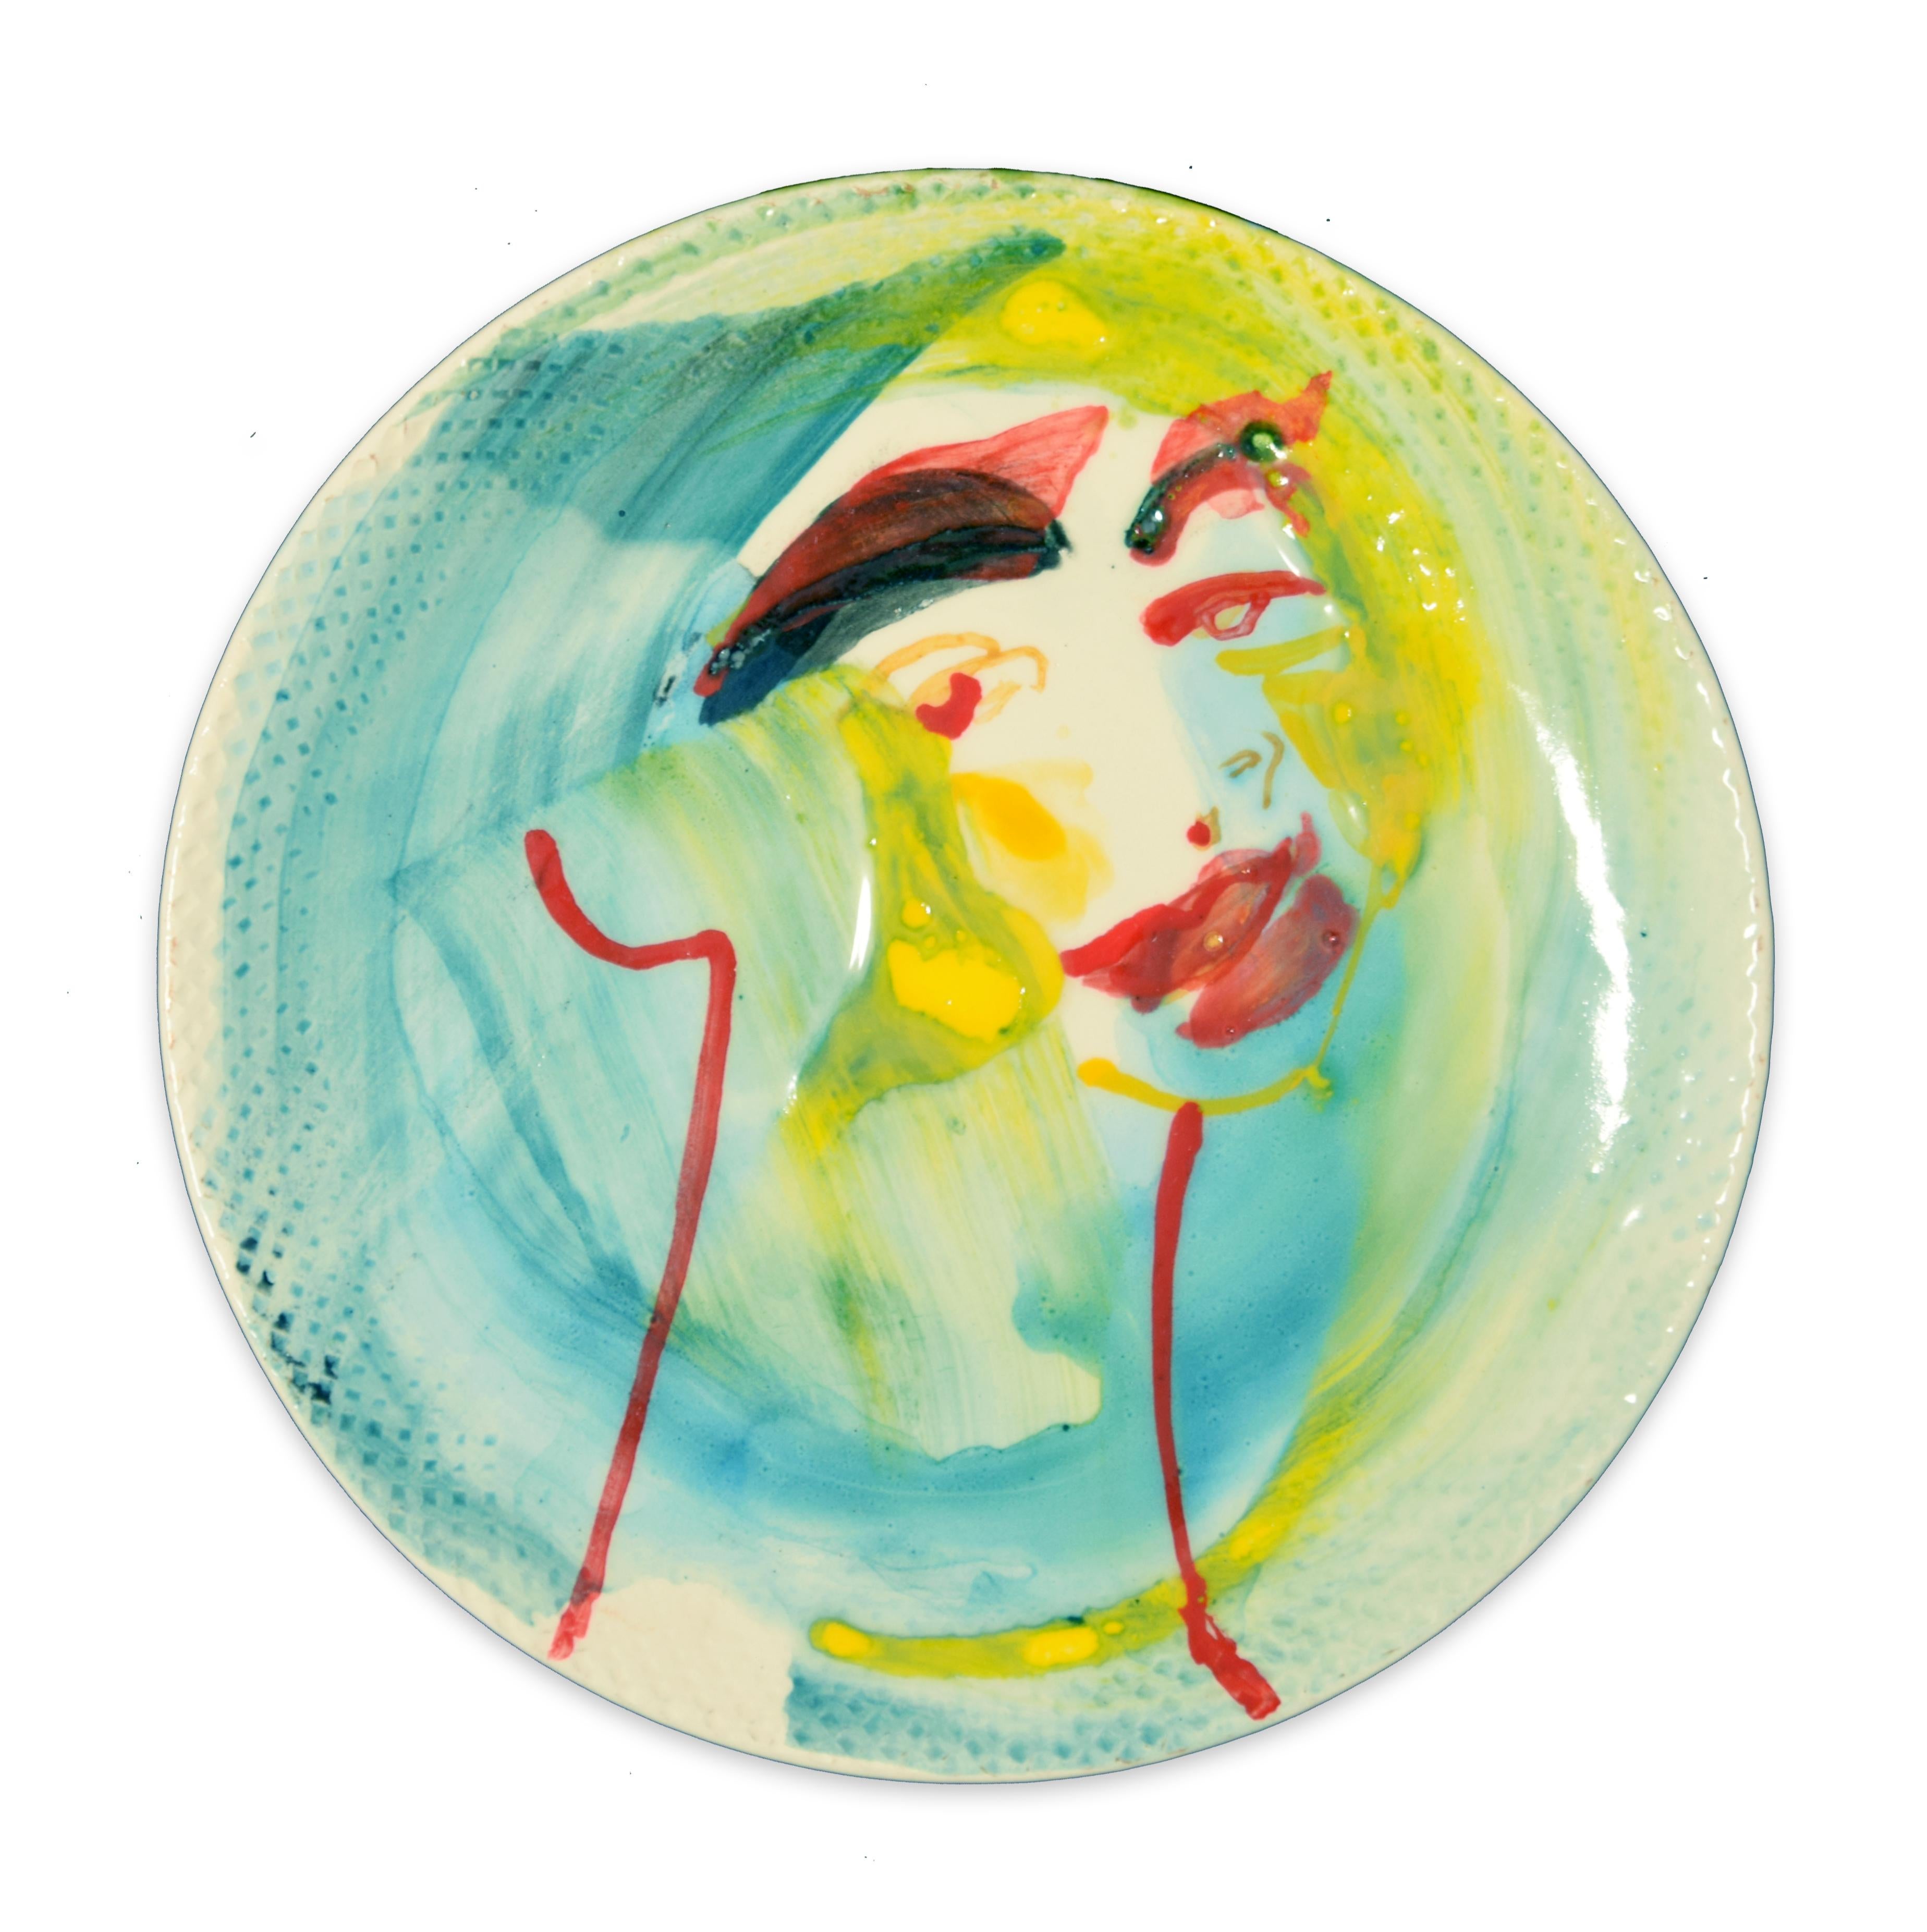 Look at You - Original  Hand-Made Flat Ceramic Dish by A. Kurakina - 2019